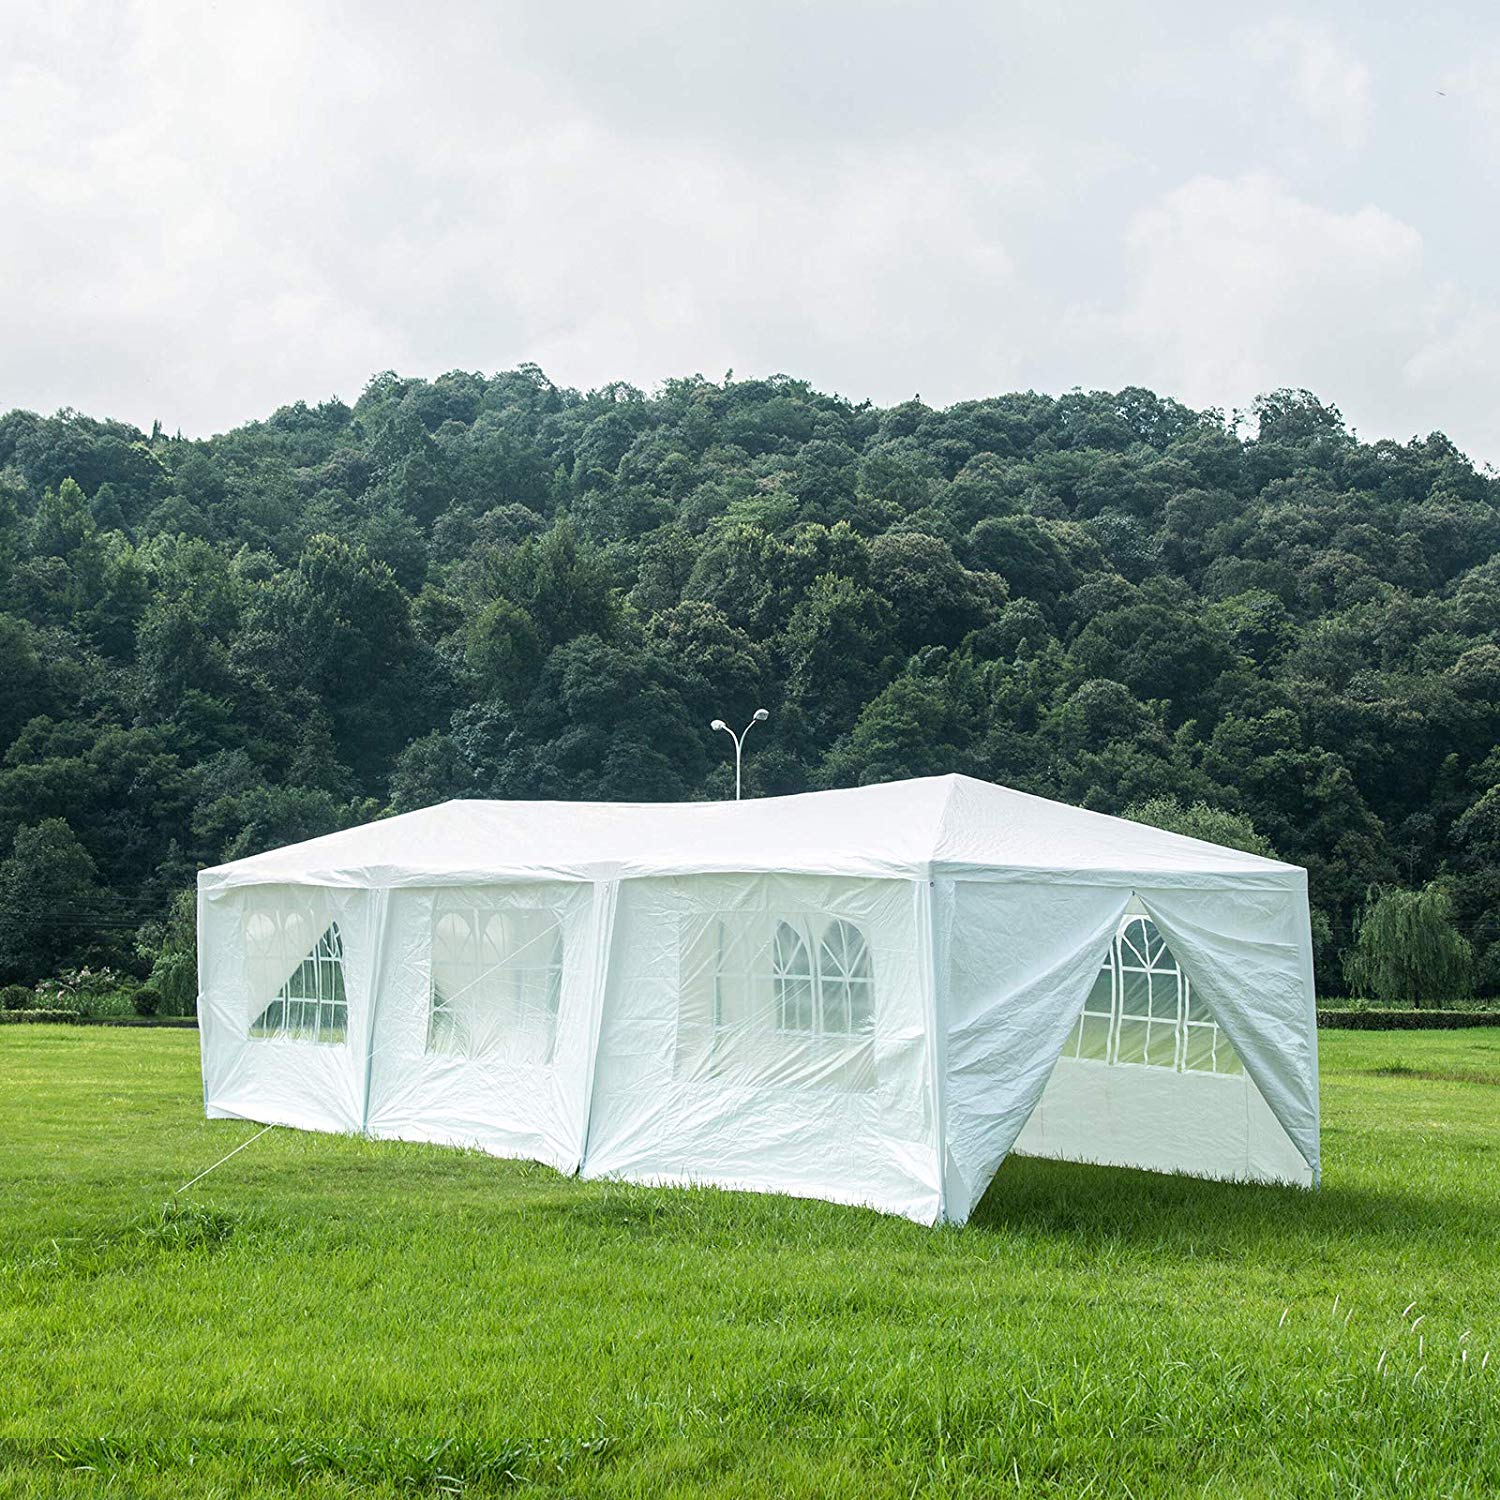 Winado Canopy Party Wedding Tent Outdoor Camping Gazebo Canopy with 8 Sidewalls Easy Set Gazebo BBQ Pavilion Canopy (10' X 30')